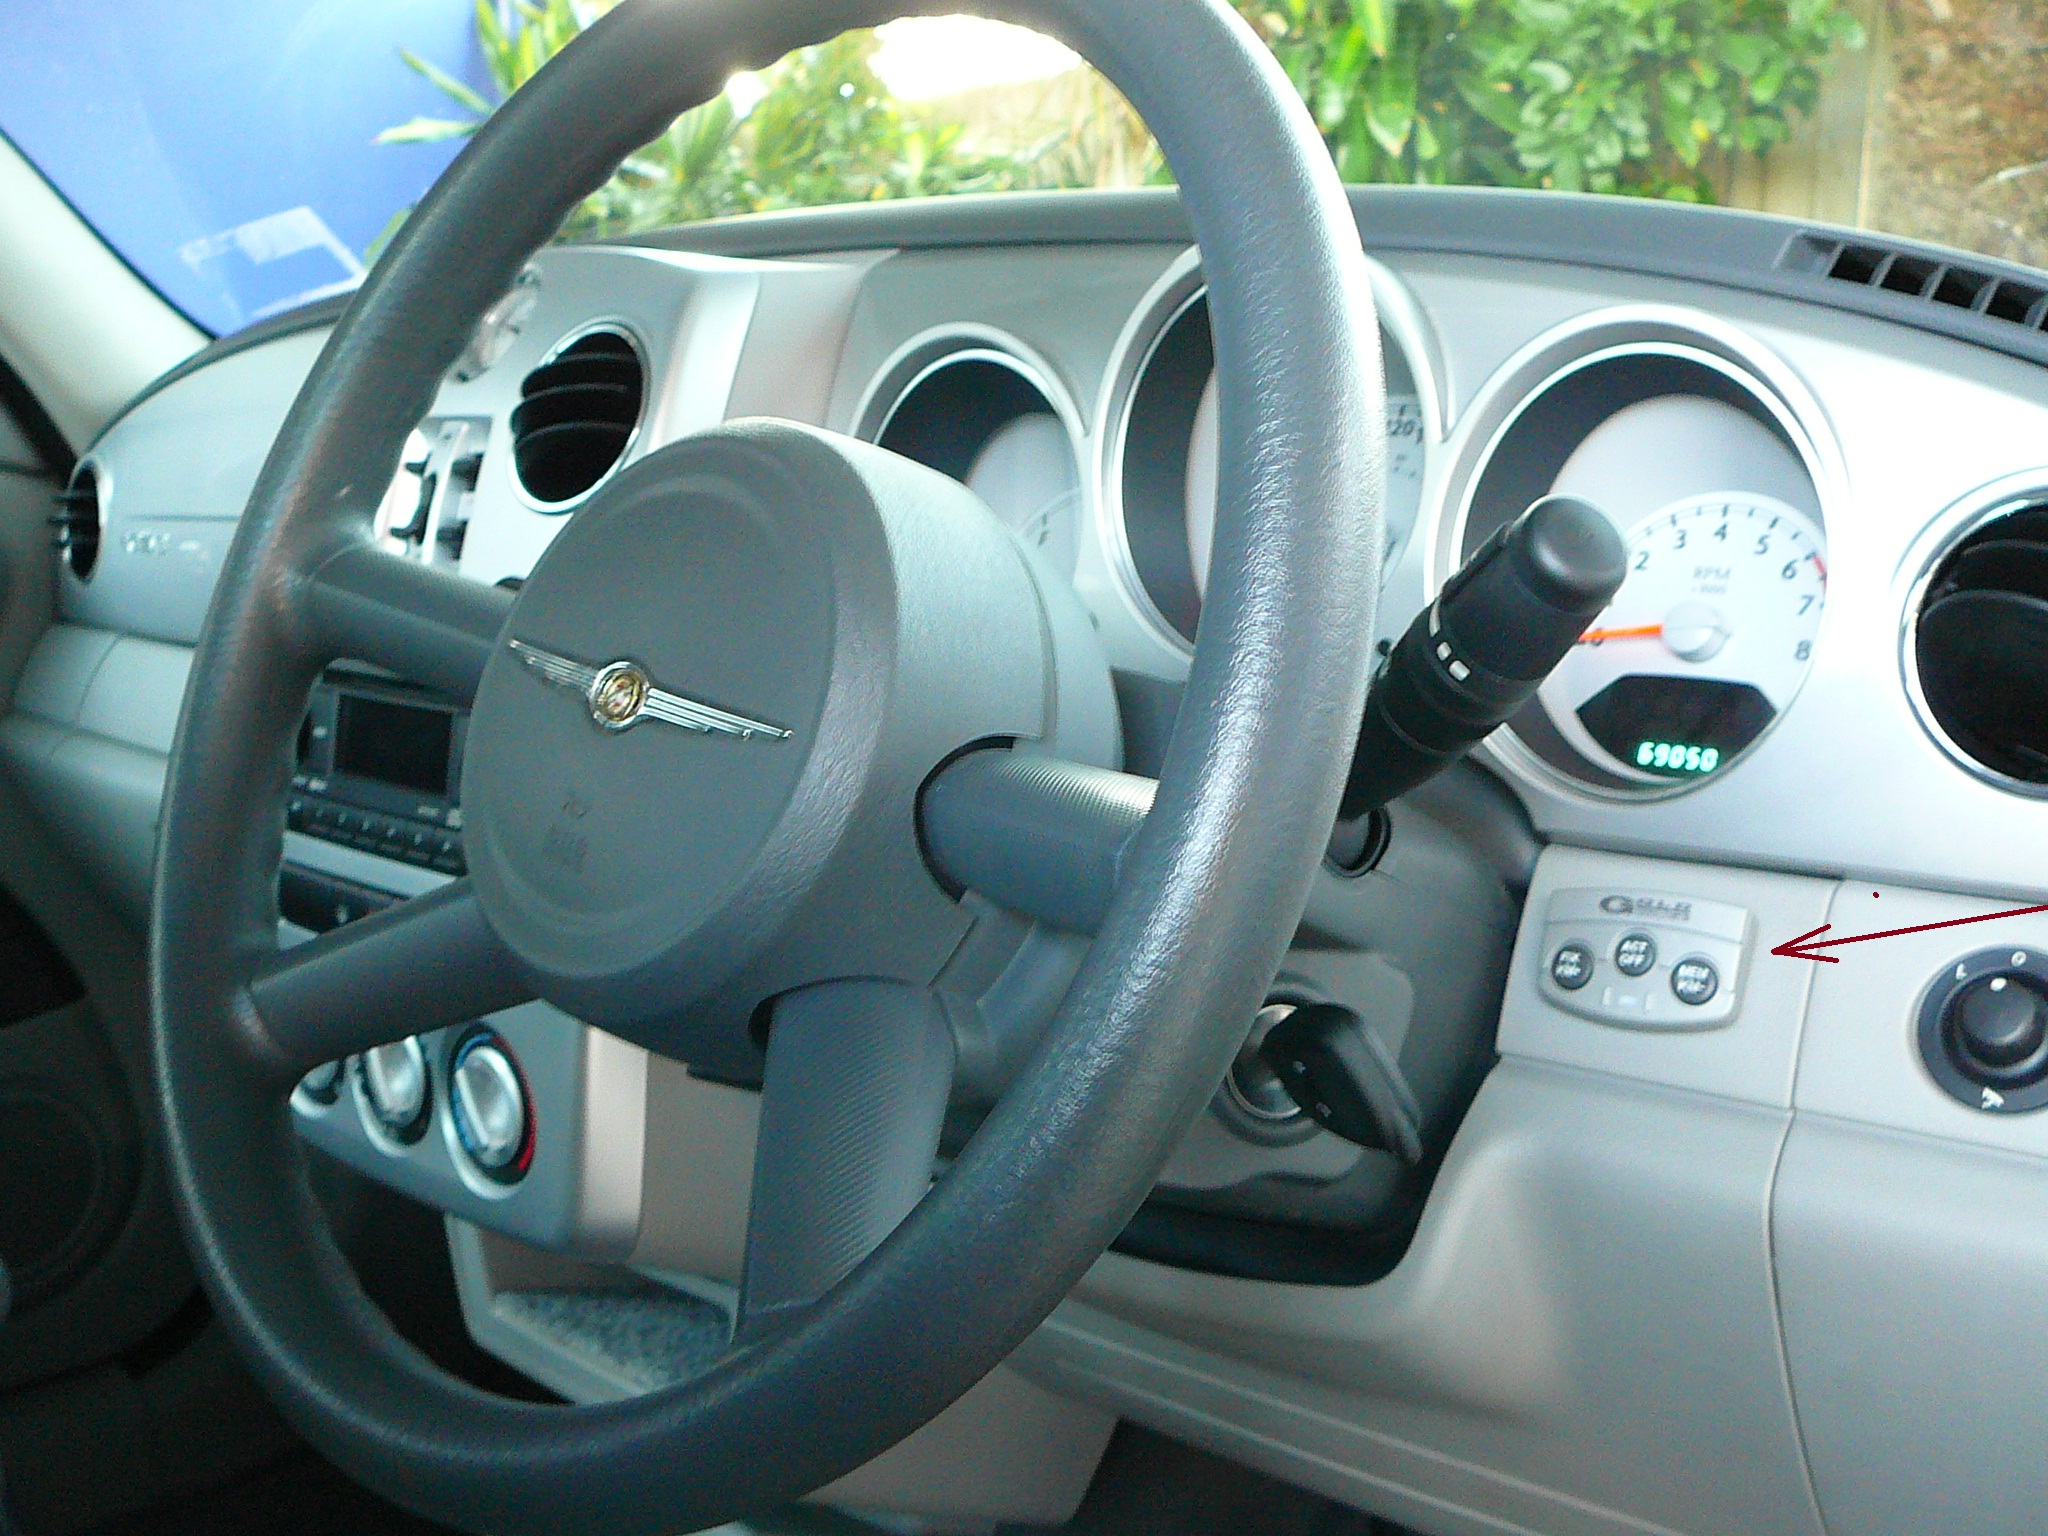 Chrysler PT Cruiser 2006, Cruise Control